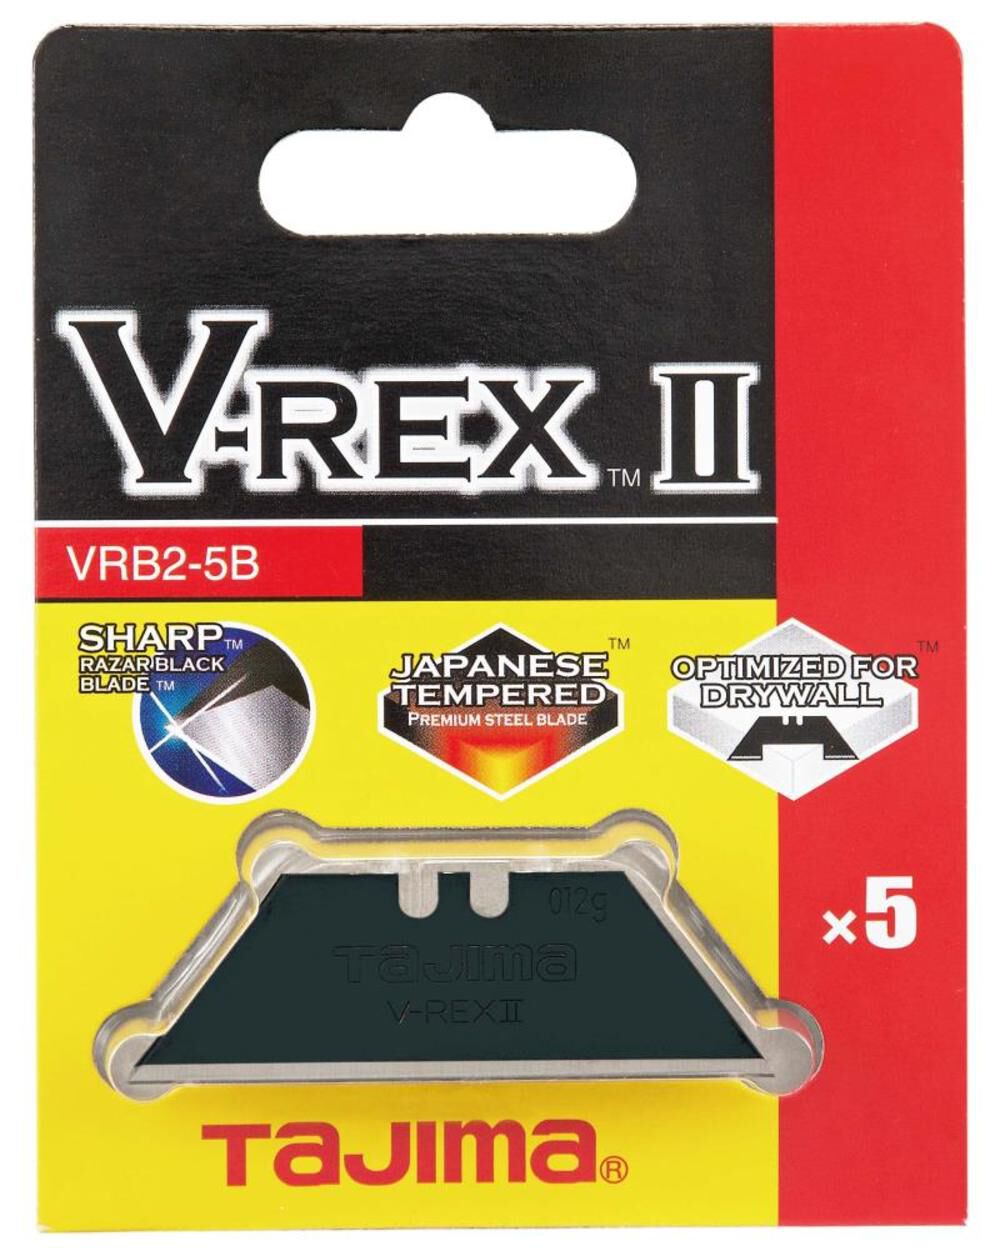 V-REX II Premium Tempered Steel Utility Knife Blades 5-Pack VRB2-5B